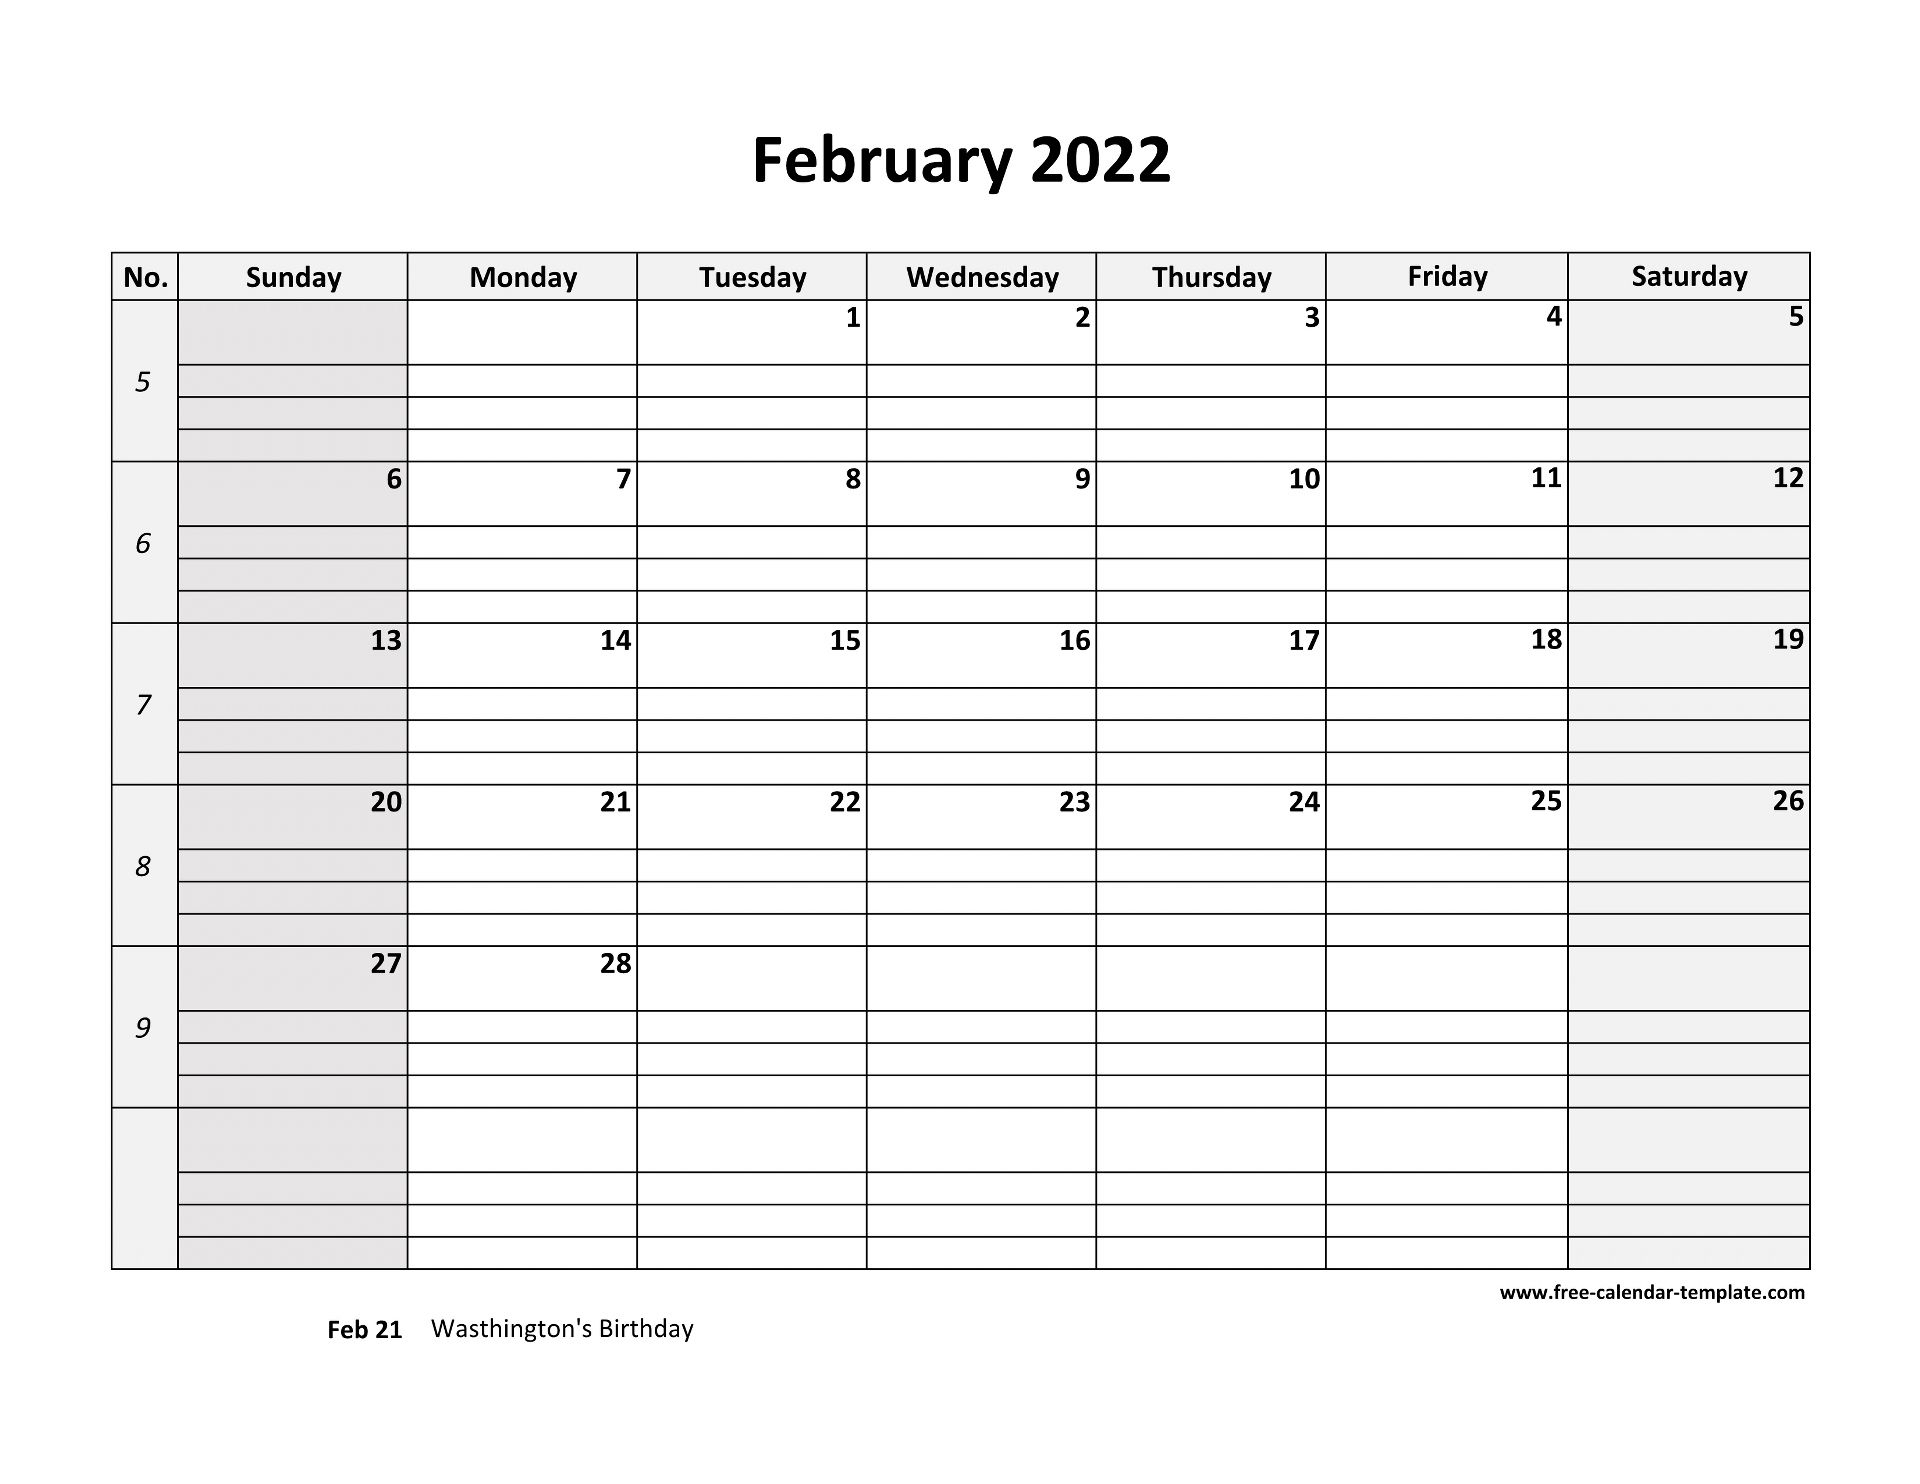 february 2022 free calendar tempplate free calendar 4